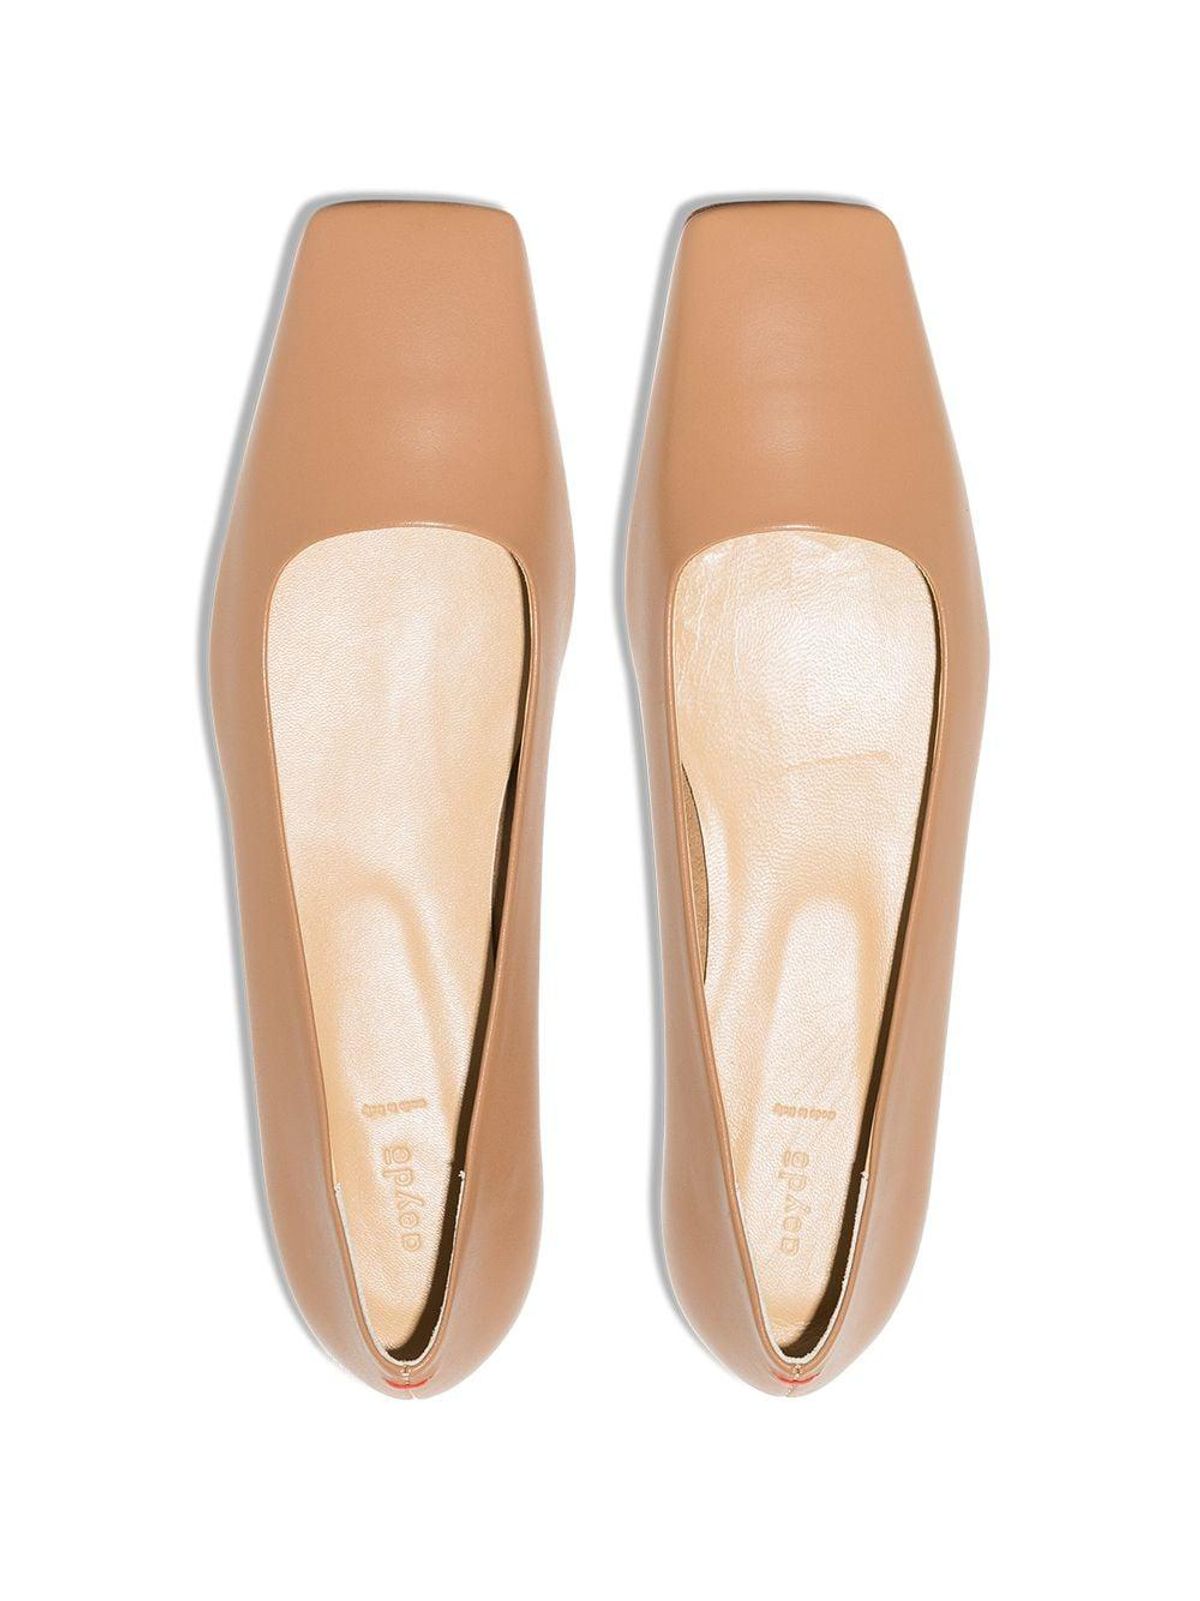 Gina Square Toe Ballerina Shoes